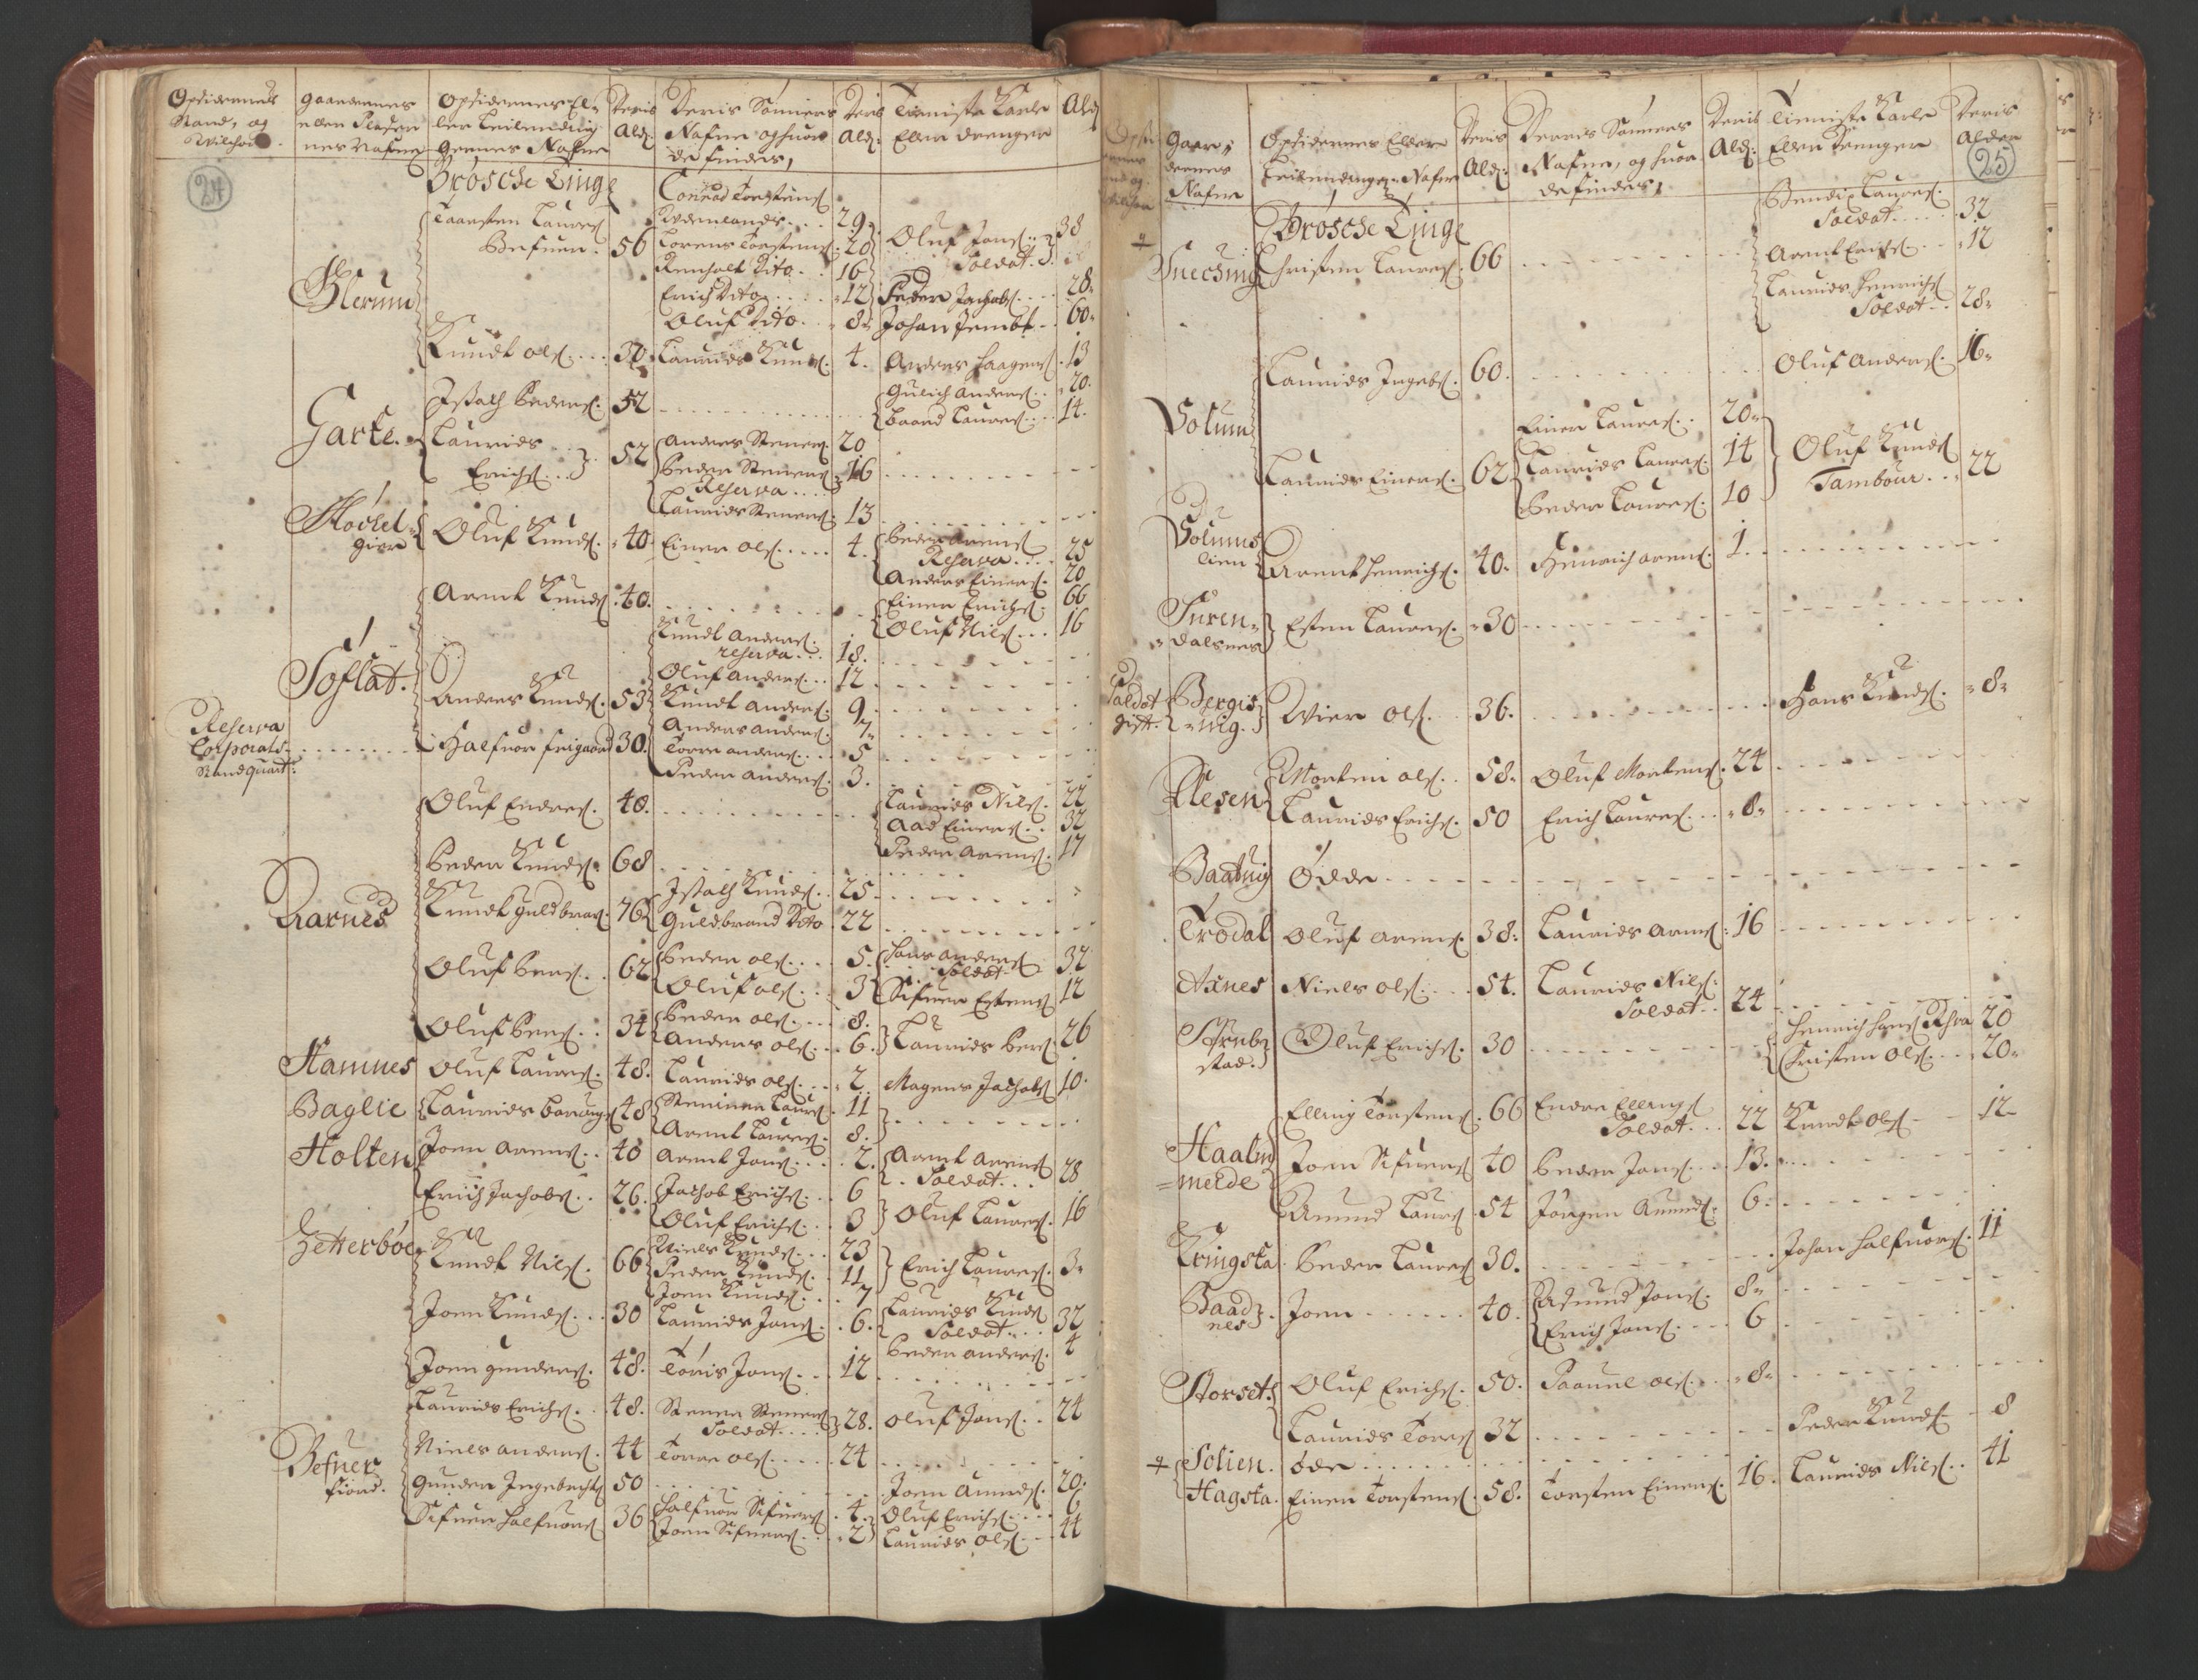 RA, Census (manntall) 1701, no. 11: Nordmøre fogderi and Romsdal fogderi, 1701, p. 24-25